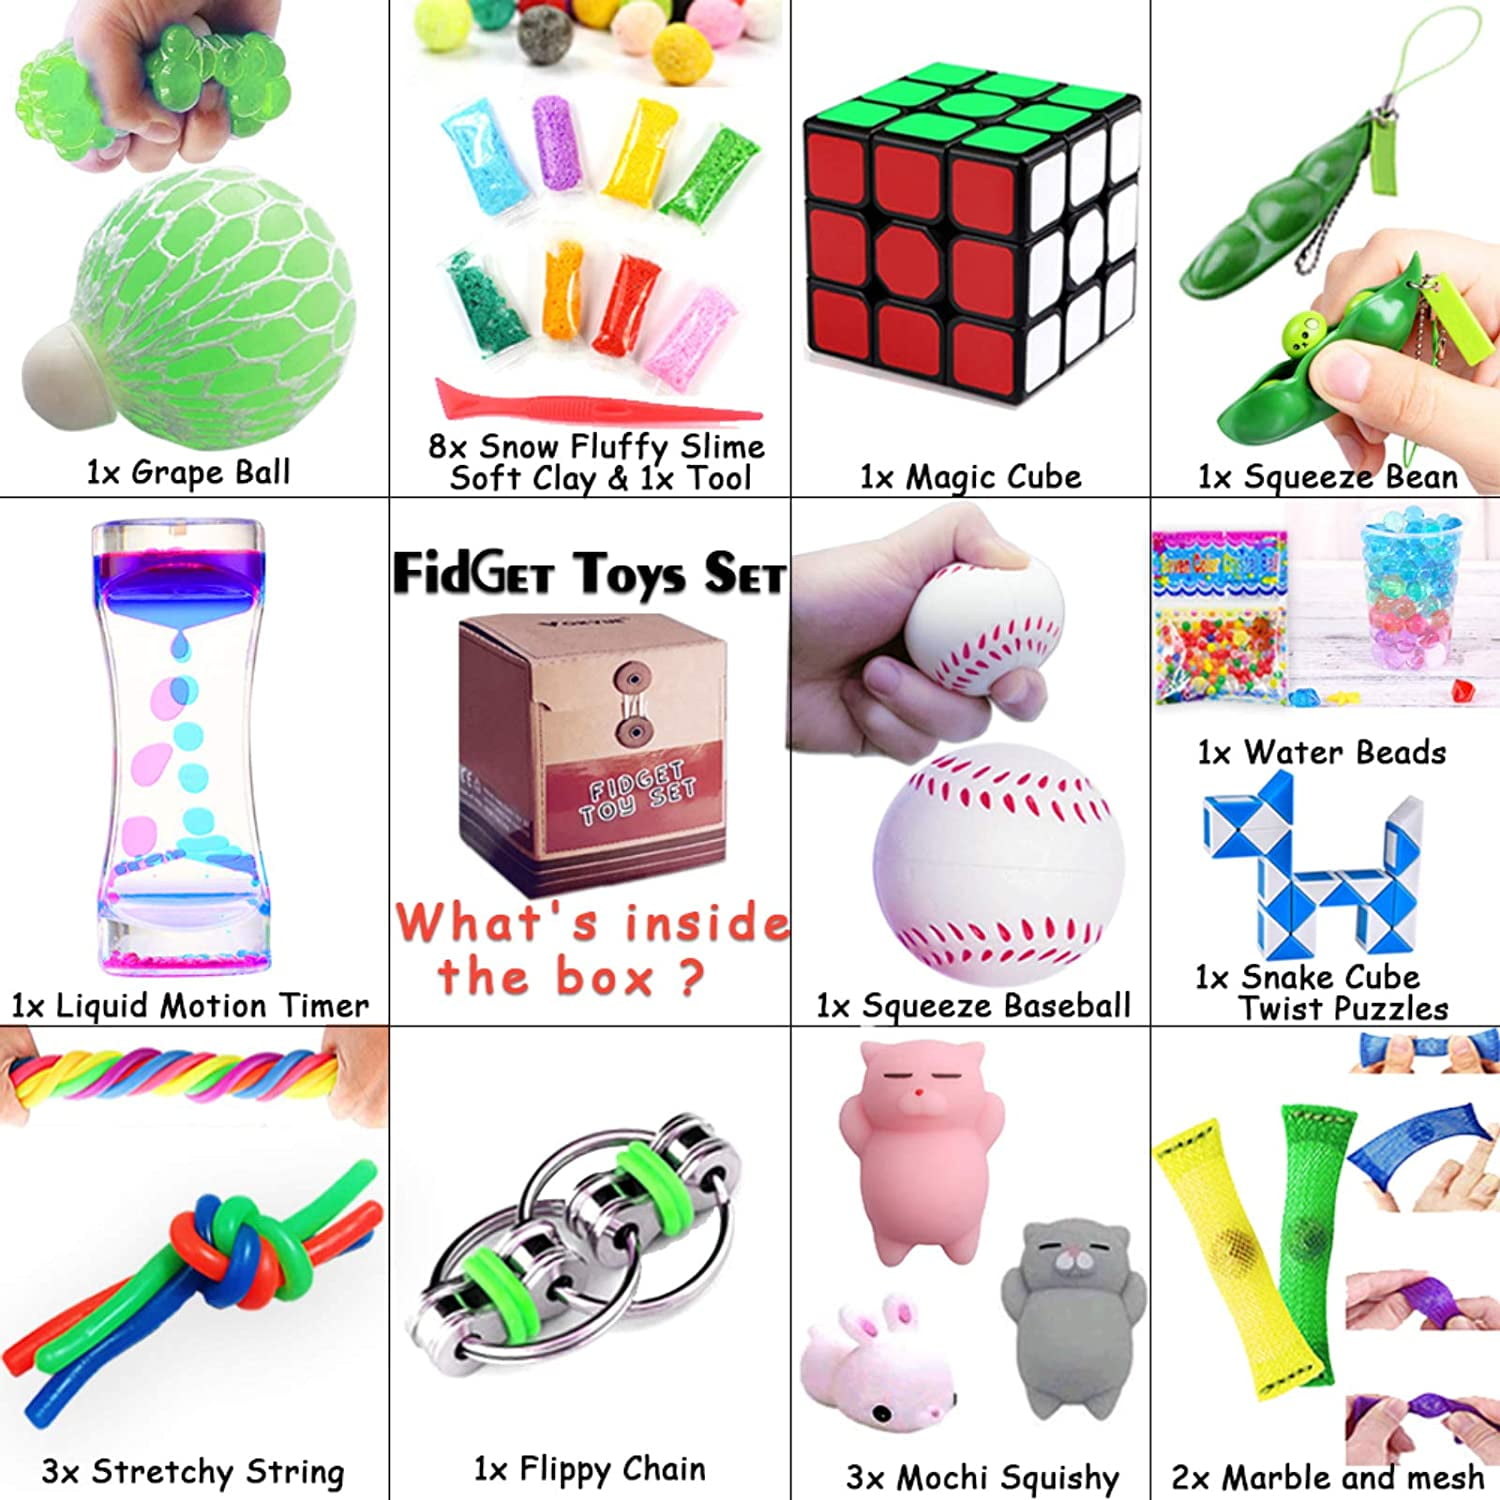 Details about   Pack of 4pcs Fidget Toys Set Sensory Toys Stress Relief Kids Marble Mesh Mochi 